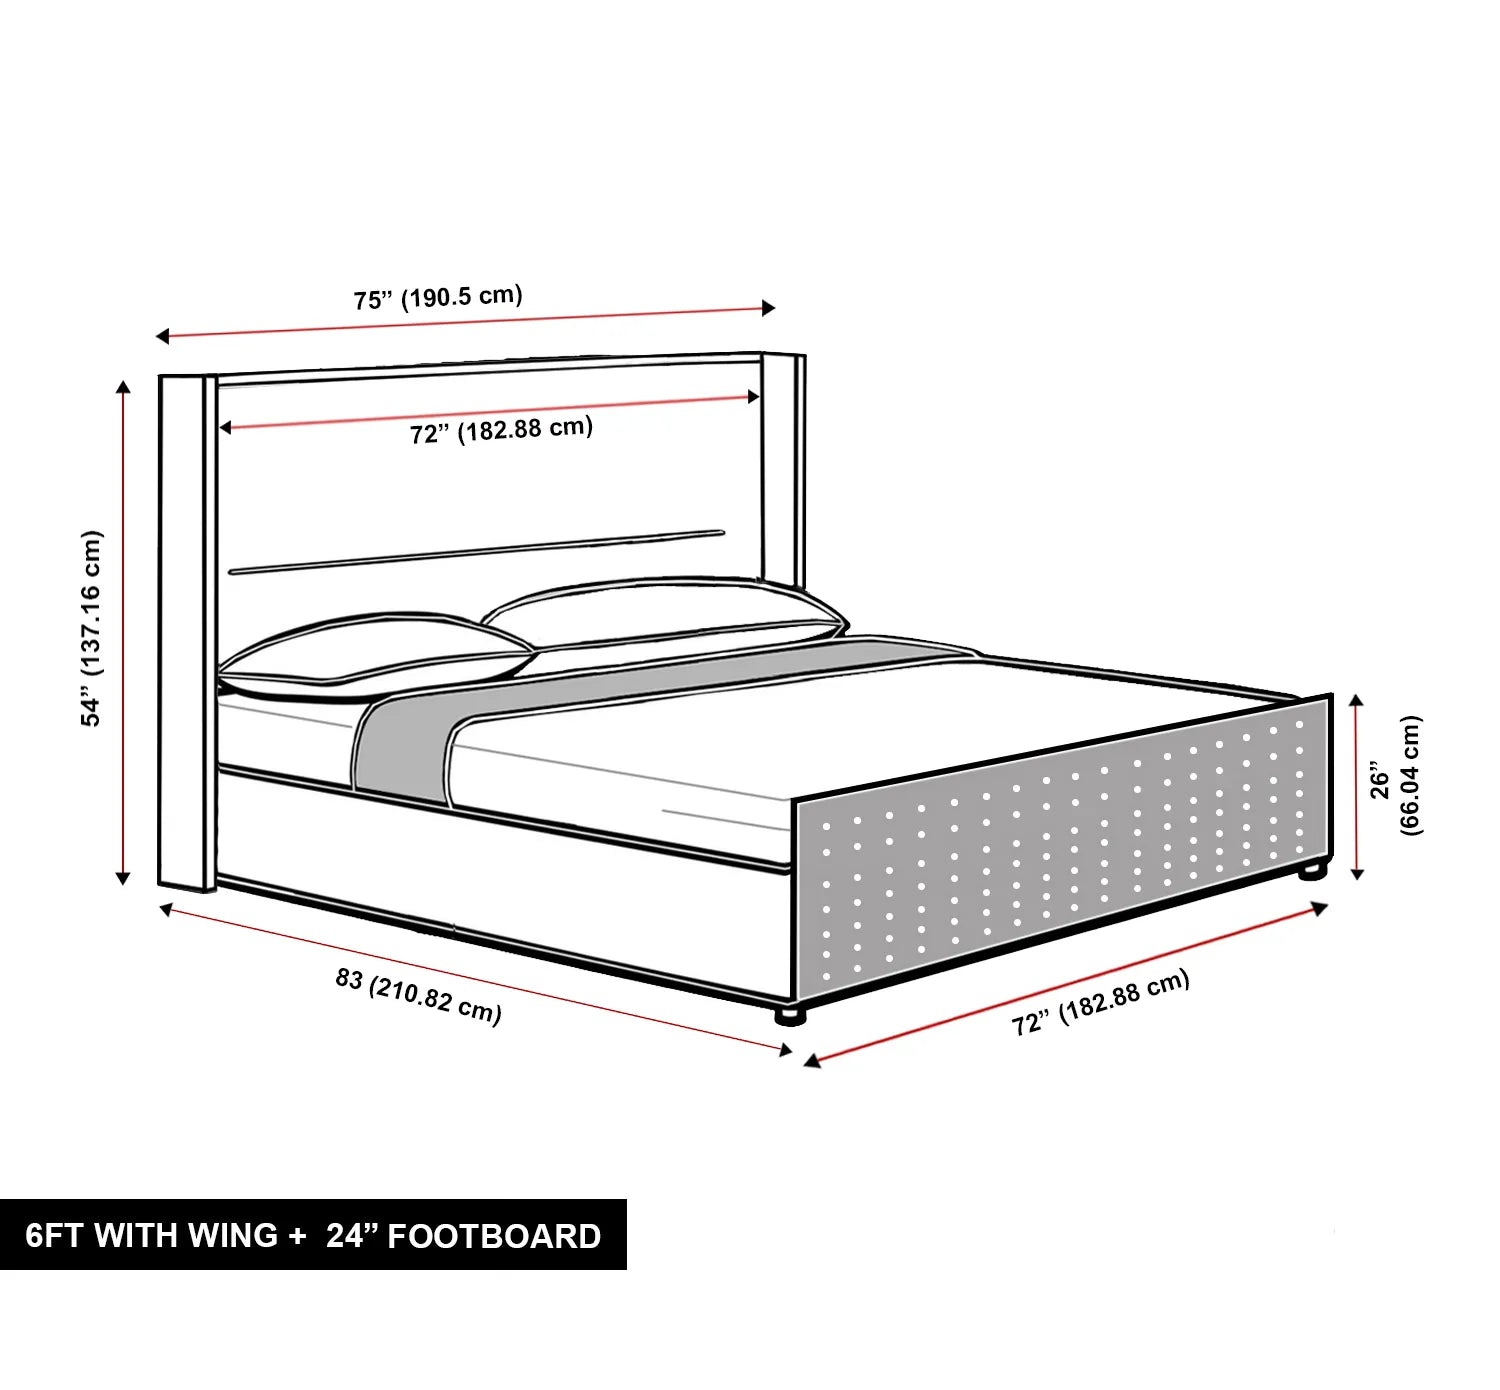 The Sydney Divan Bed Set With Luxury Headboard